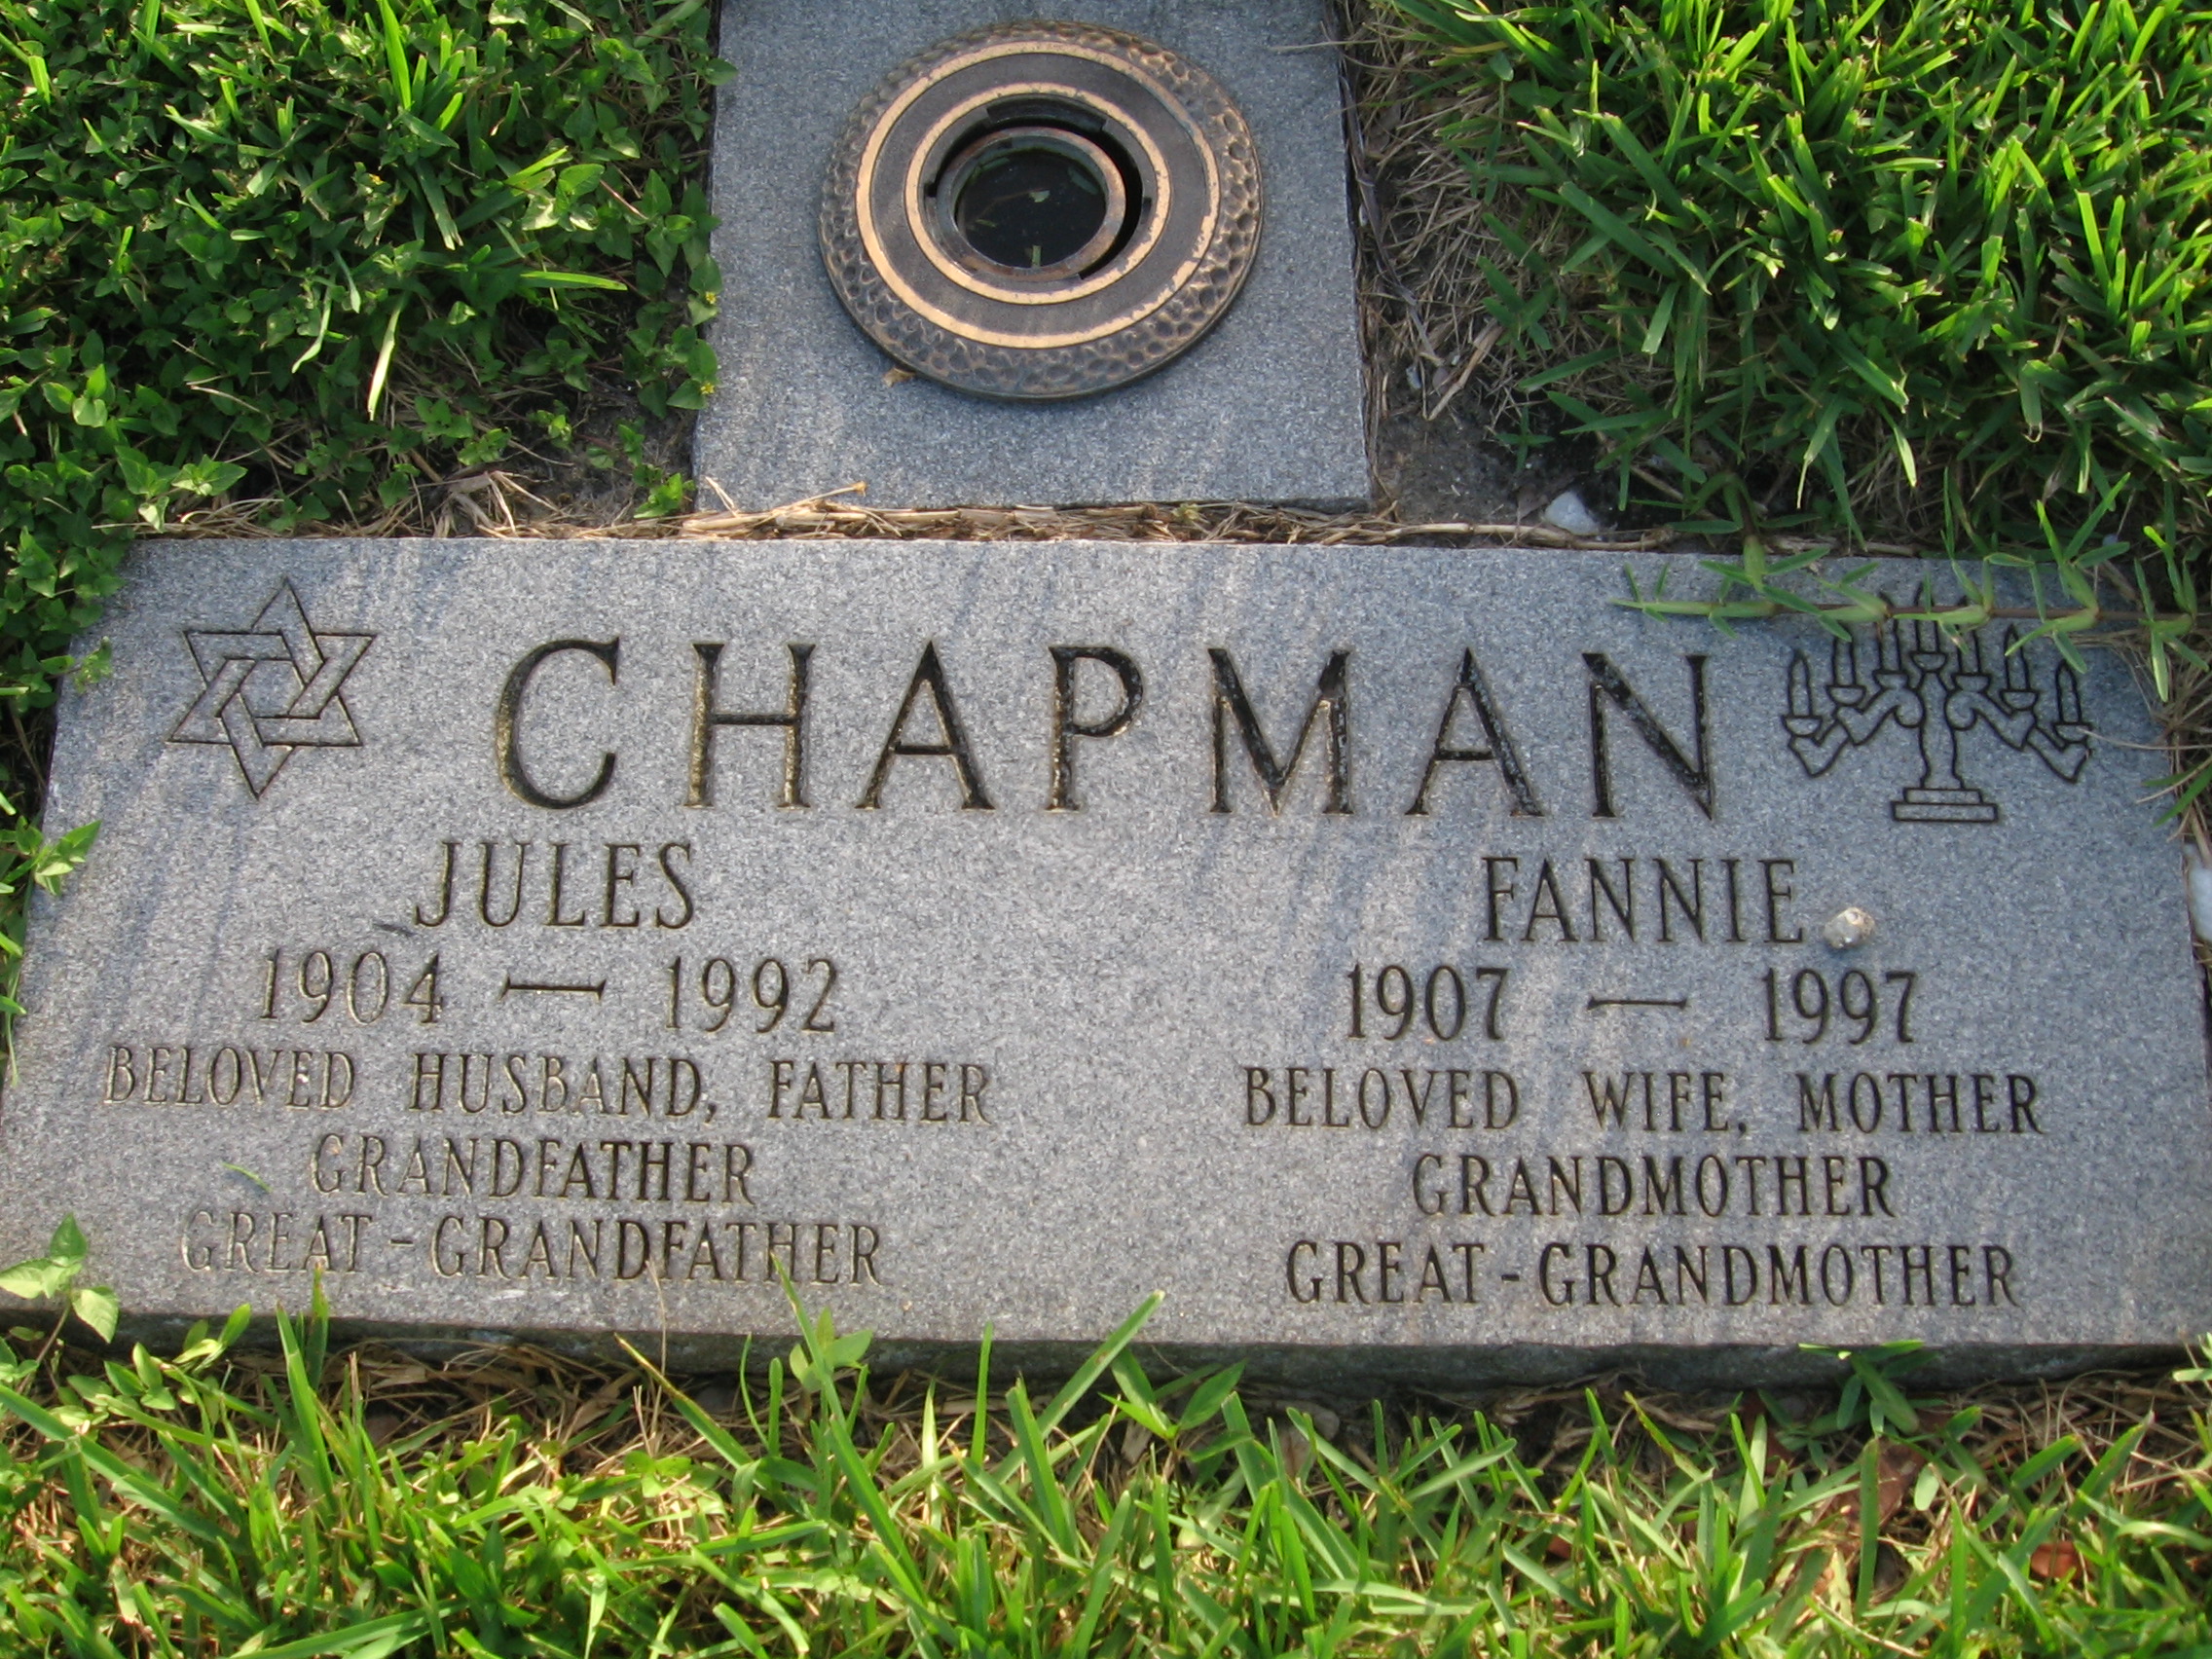 Jules Chapman